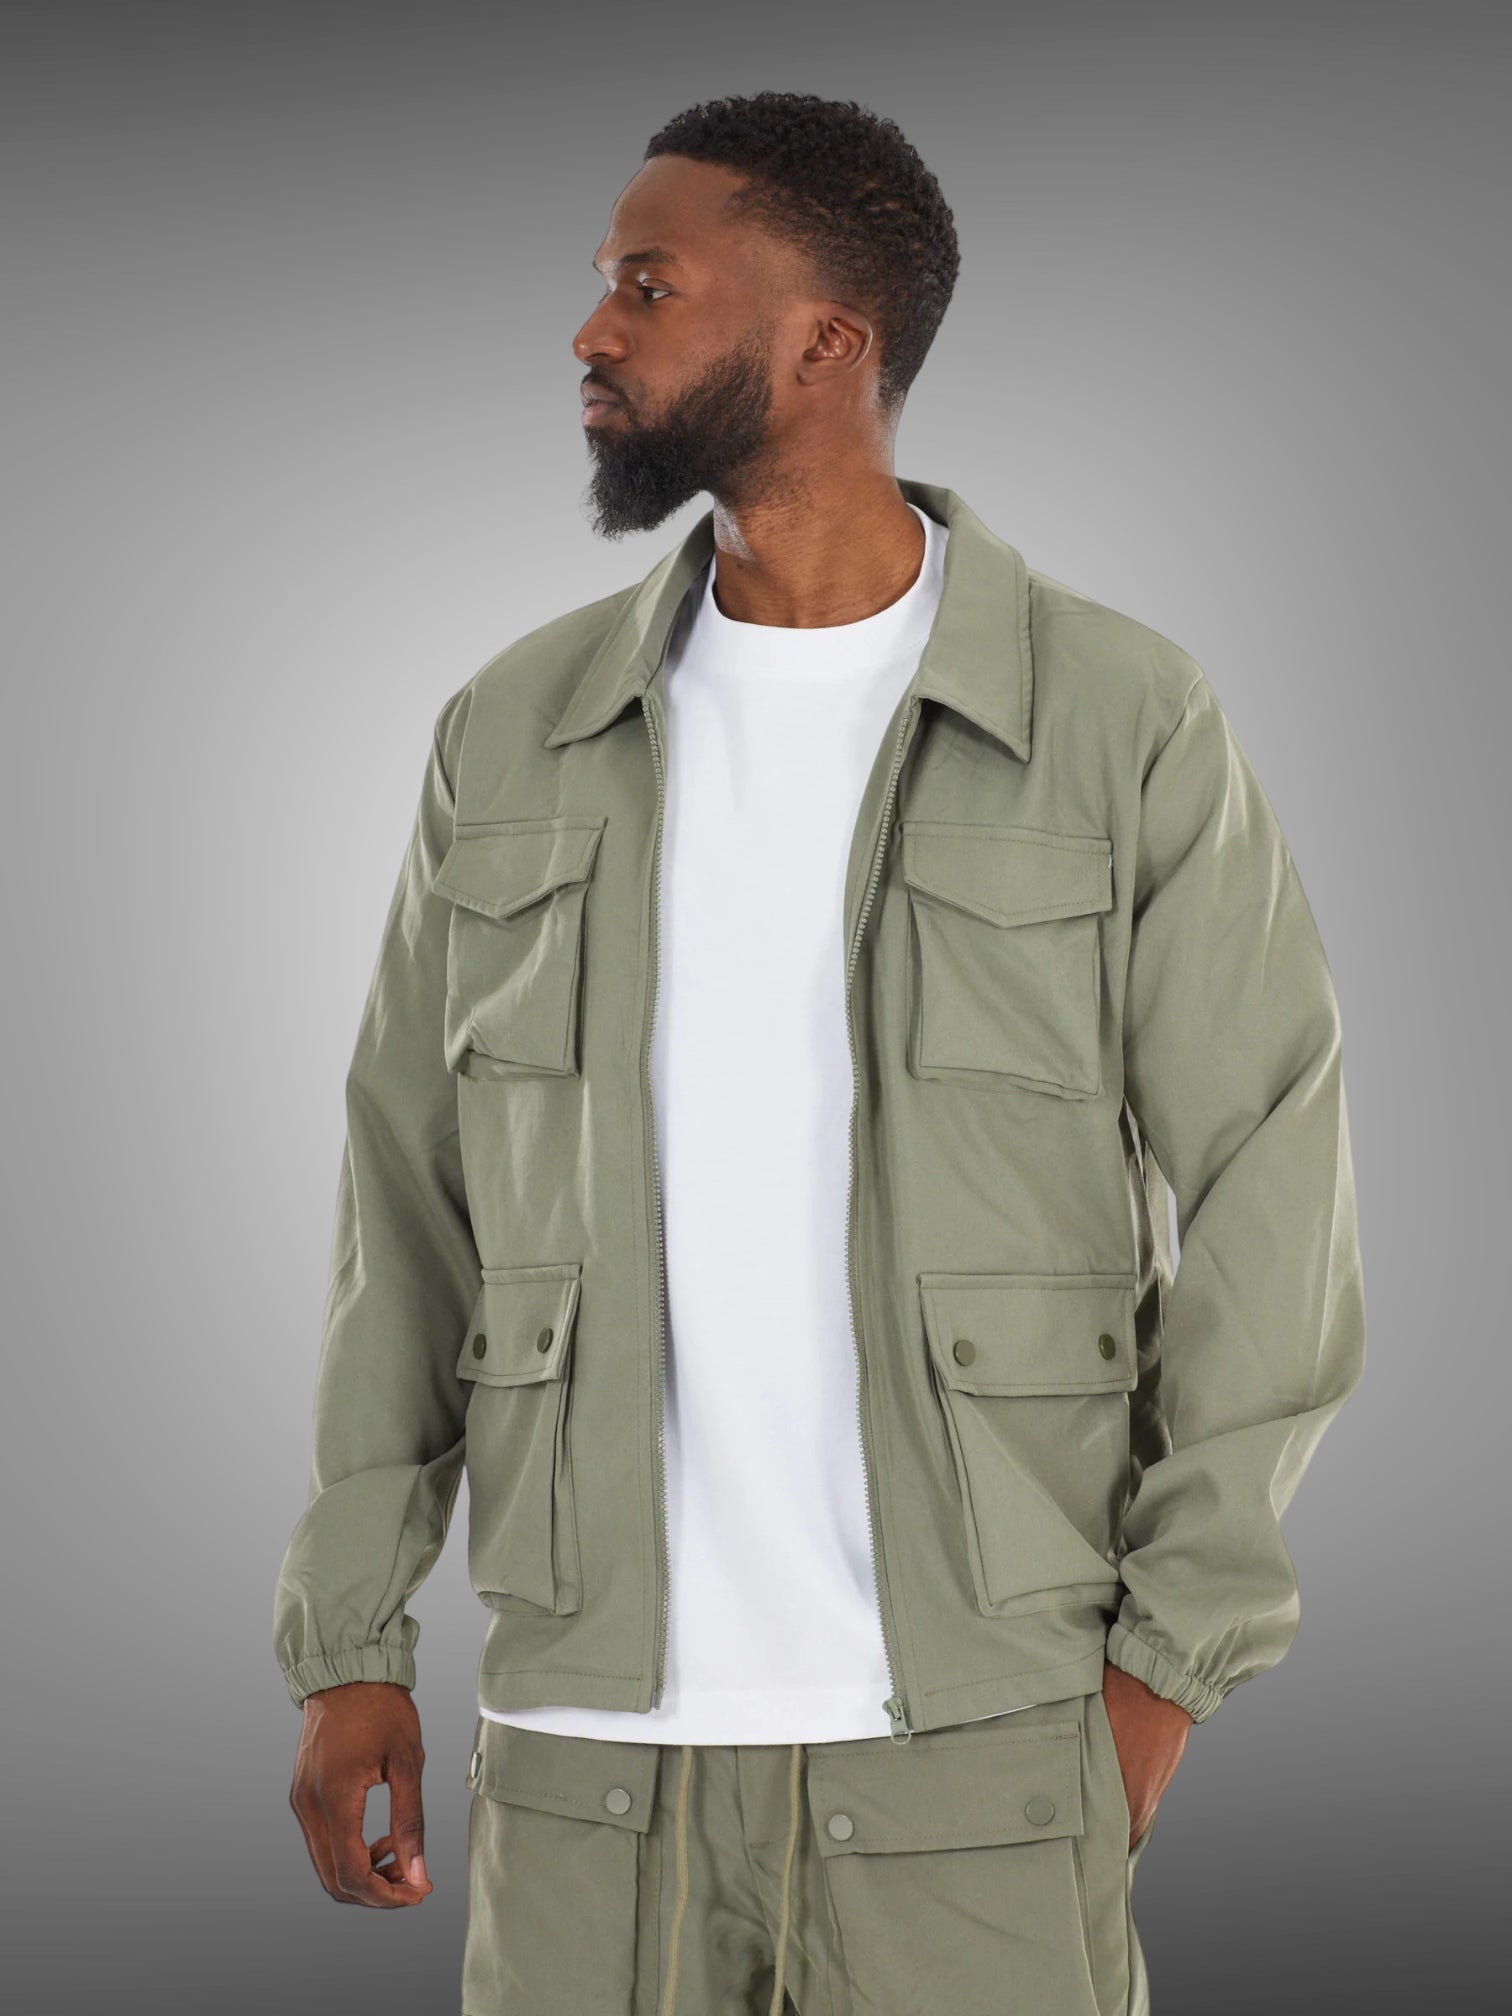 Khaki cargo jacket